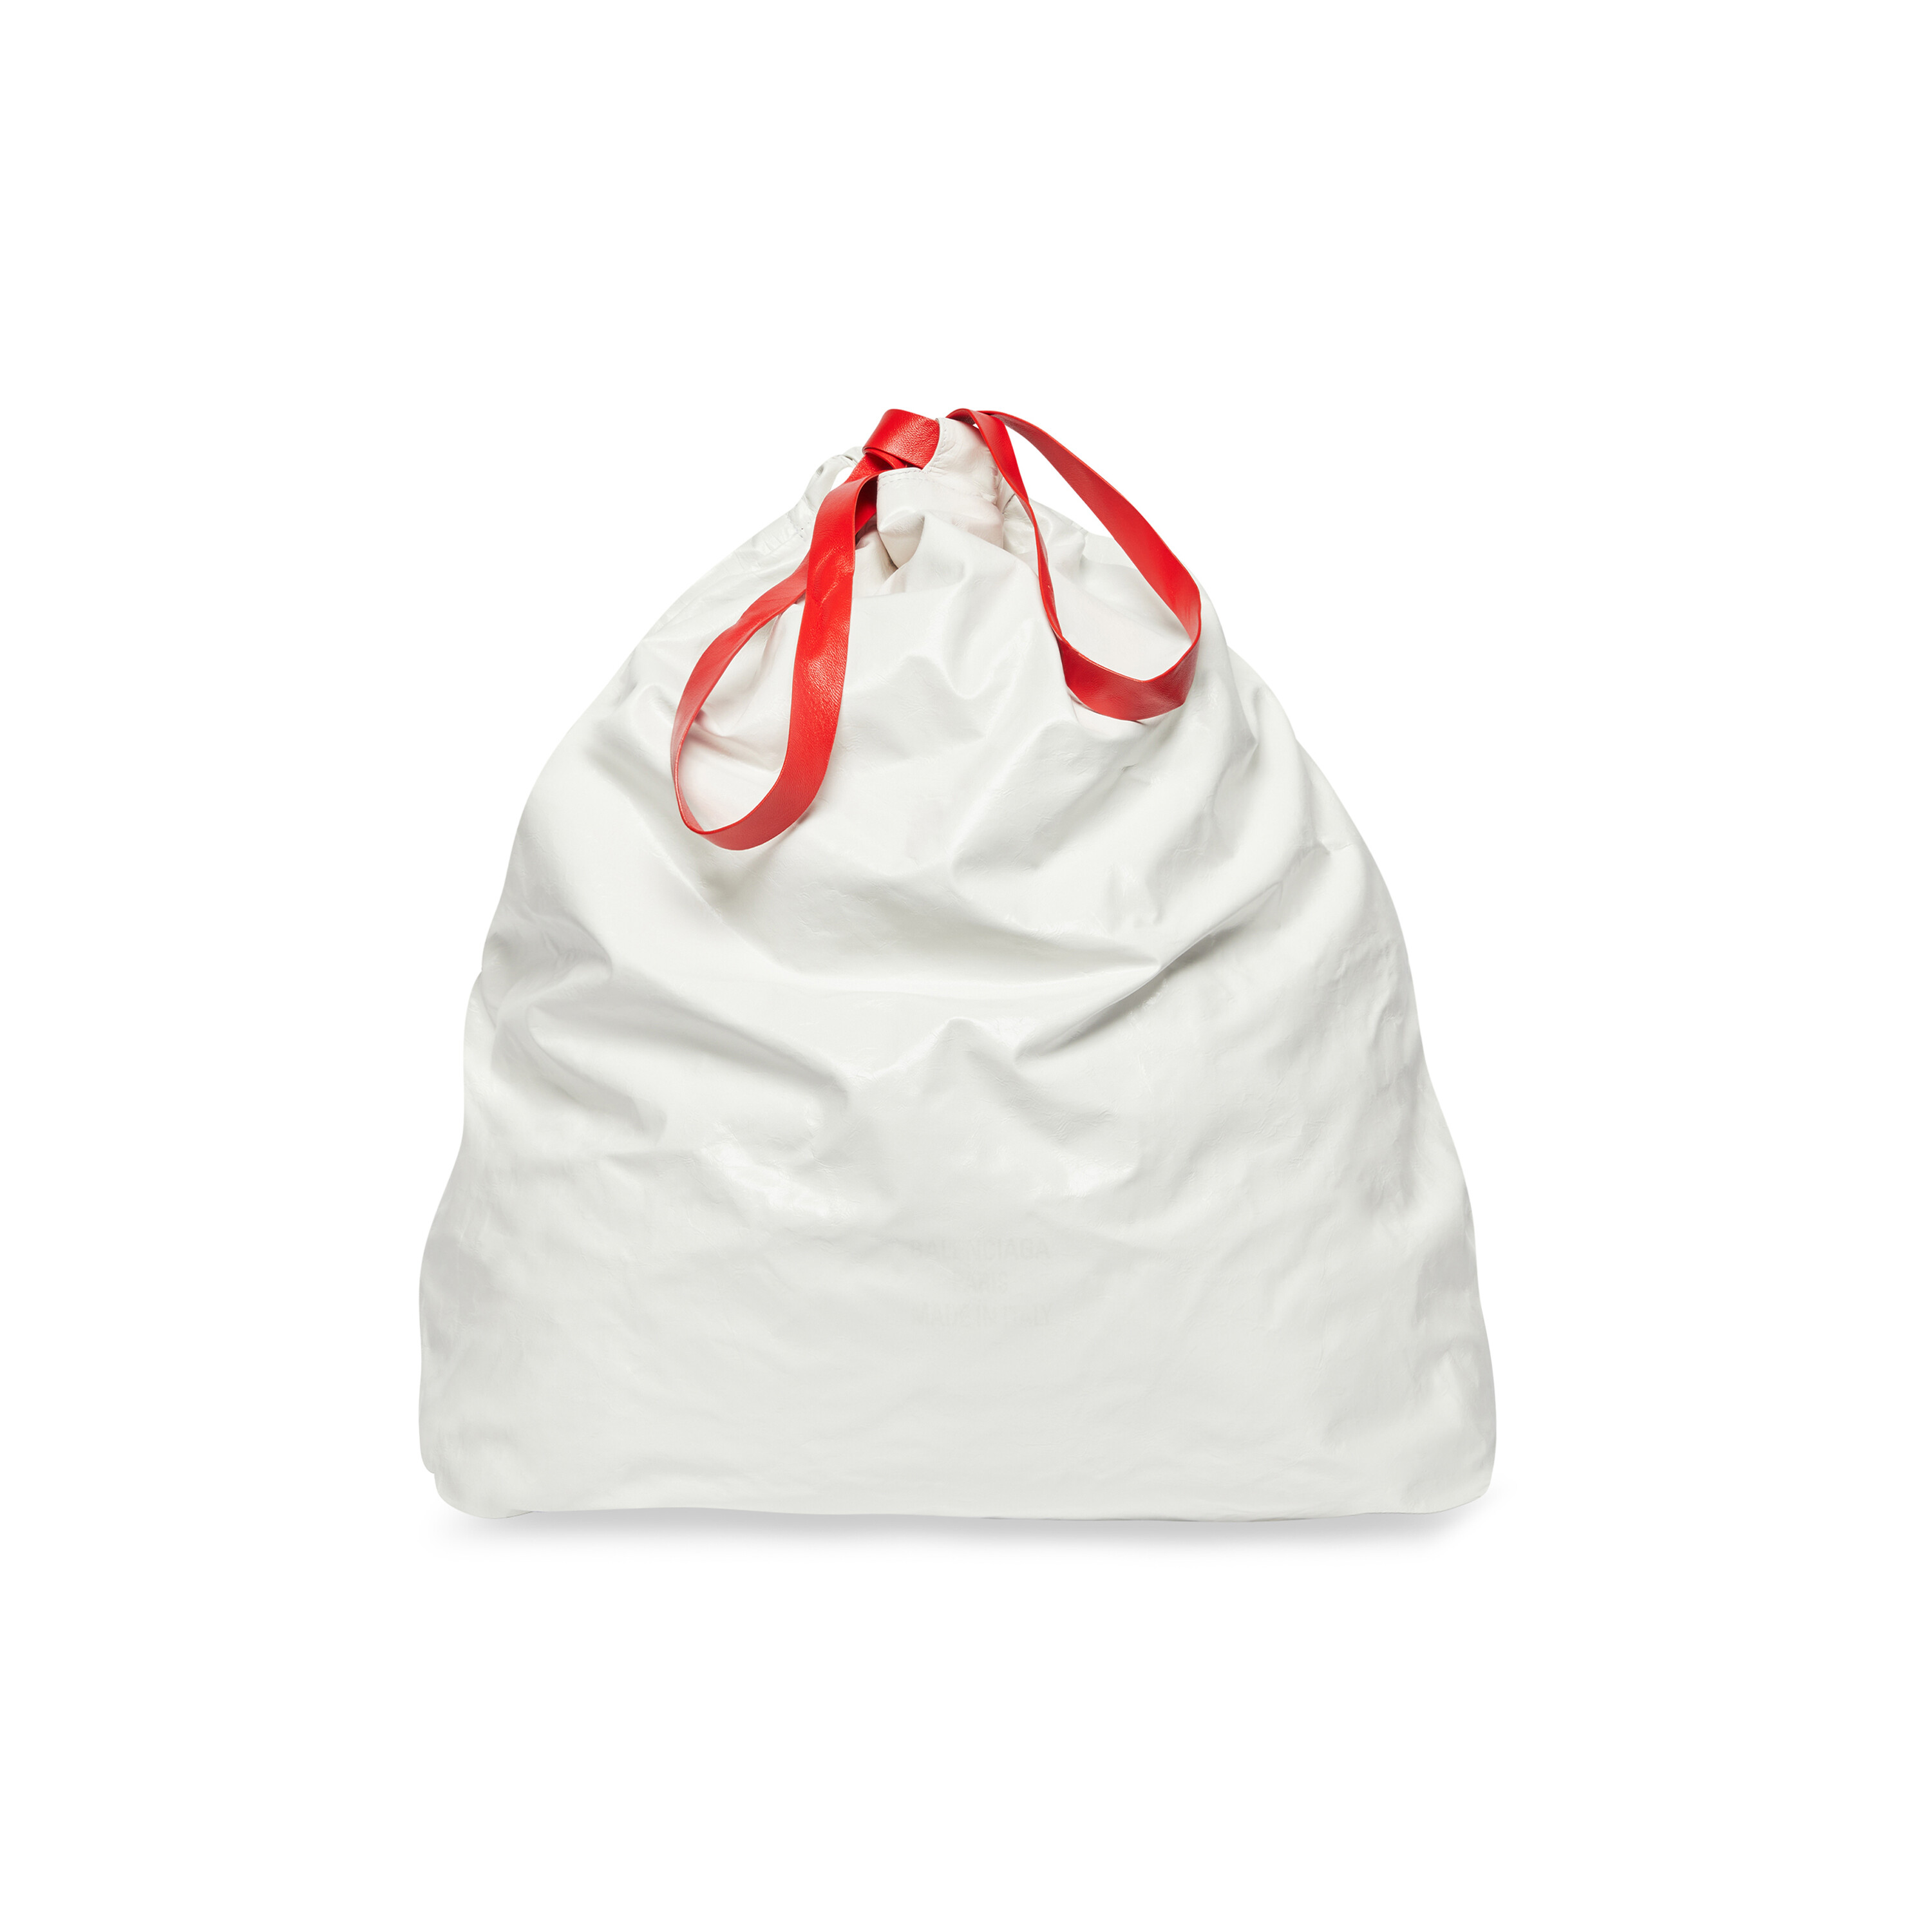 Balenciaga is at it again with this plastic bag shirt